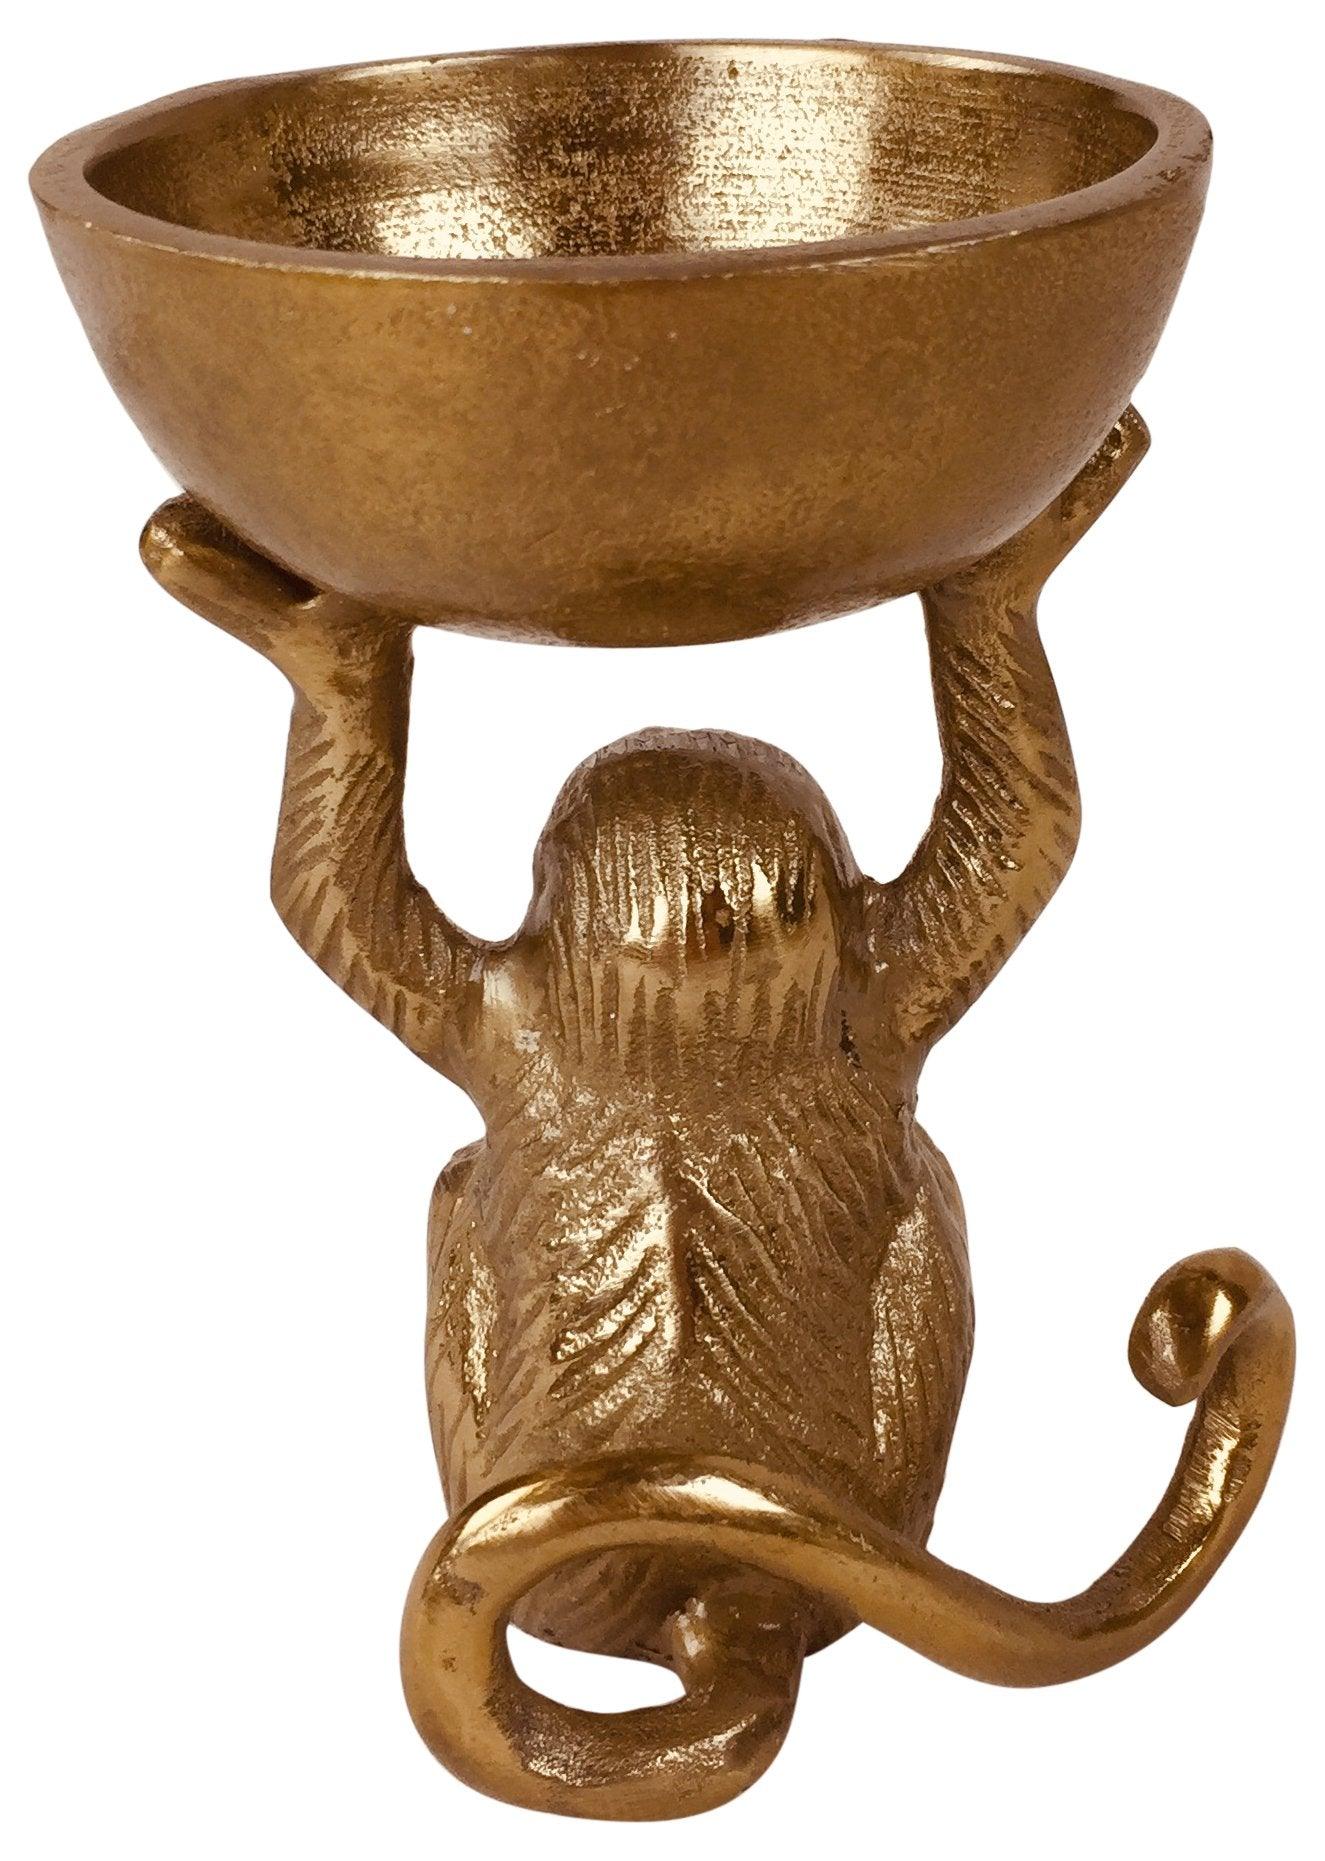 View Gold Monkey Bowl information